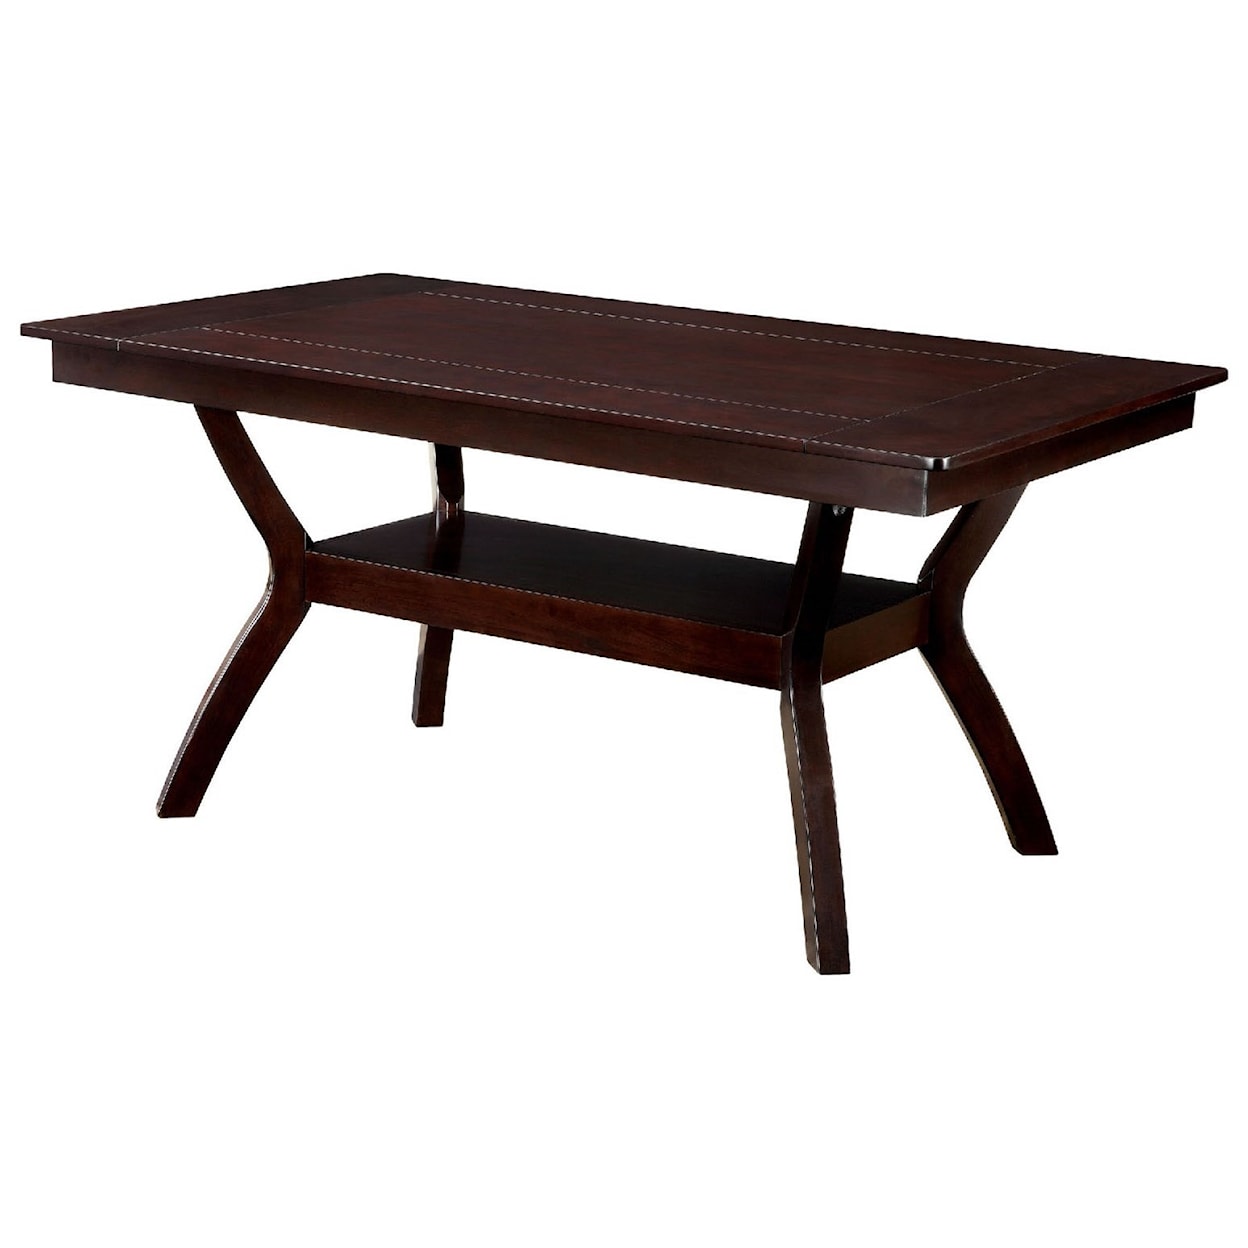 Furniture of America Brent Rectangular Dining Table